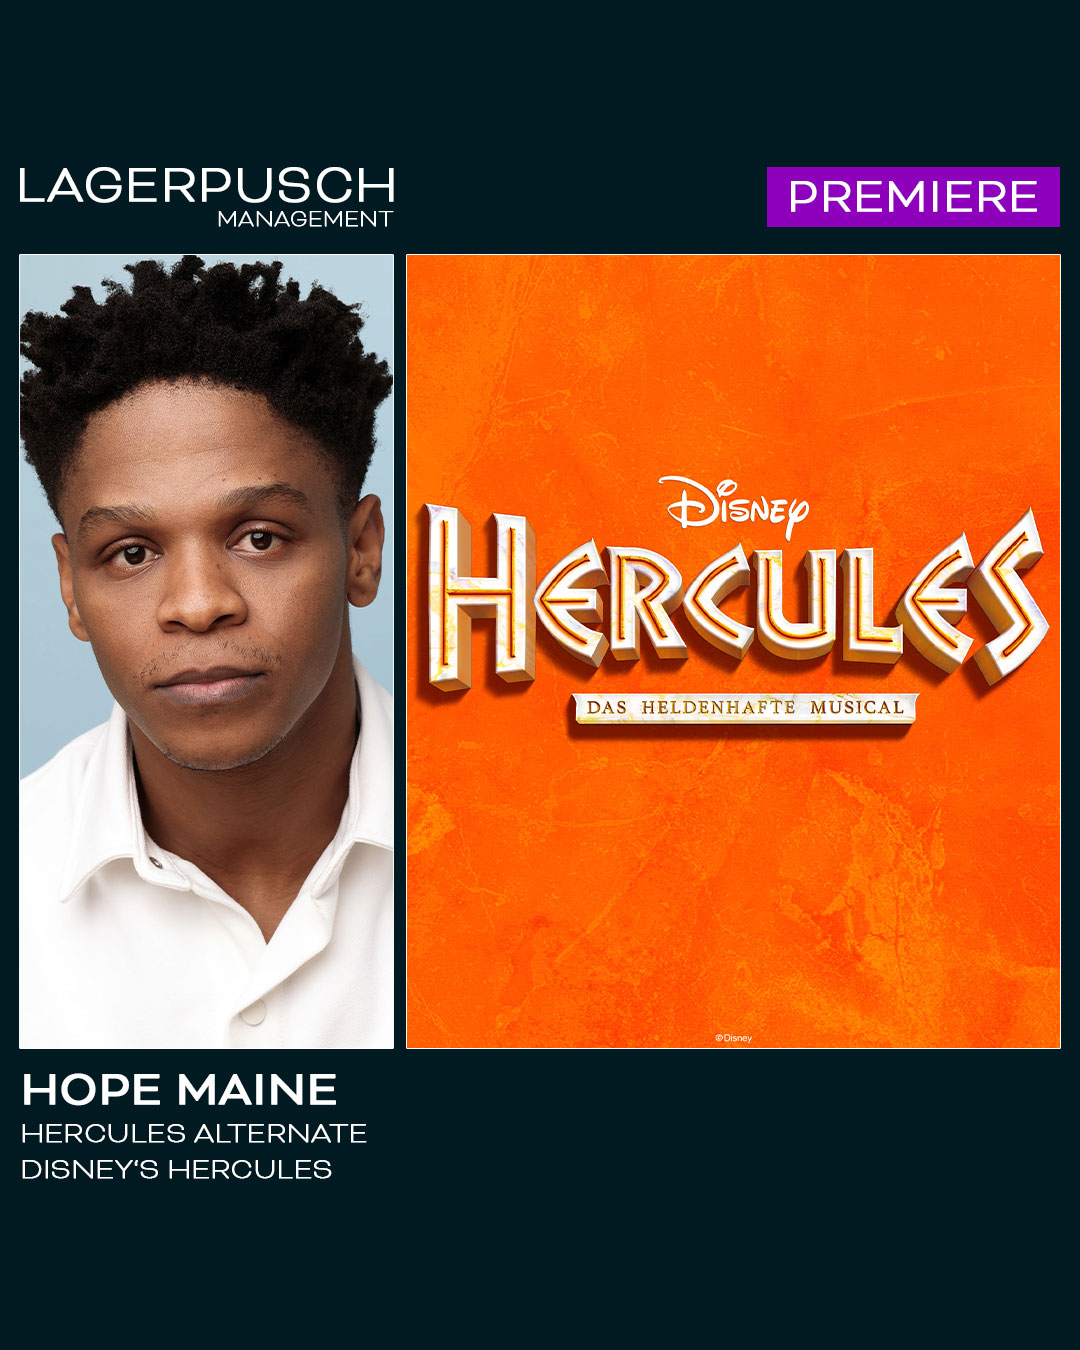 Hope Maine feiert seine erste Show als Hercules